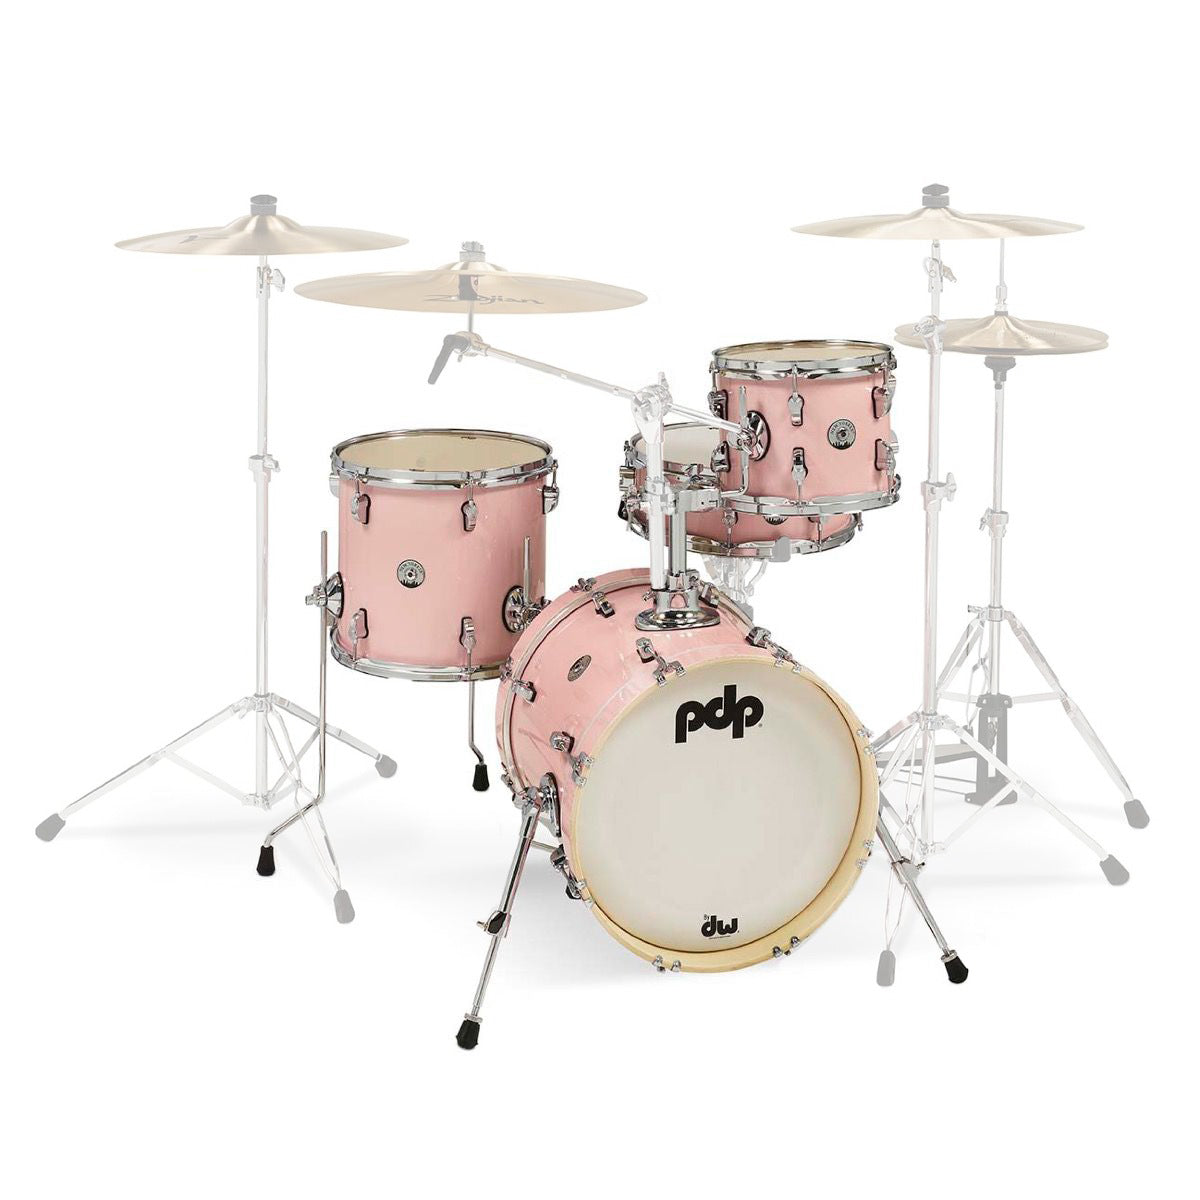 PDP New Yorker Drum Kit - Pale Rose Sparkle